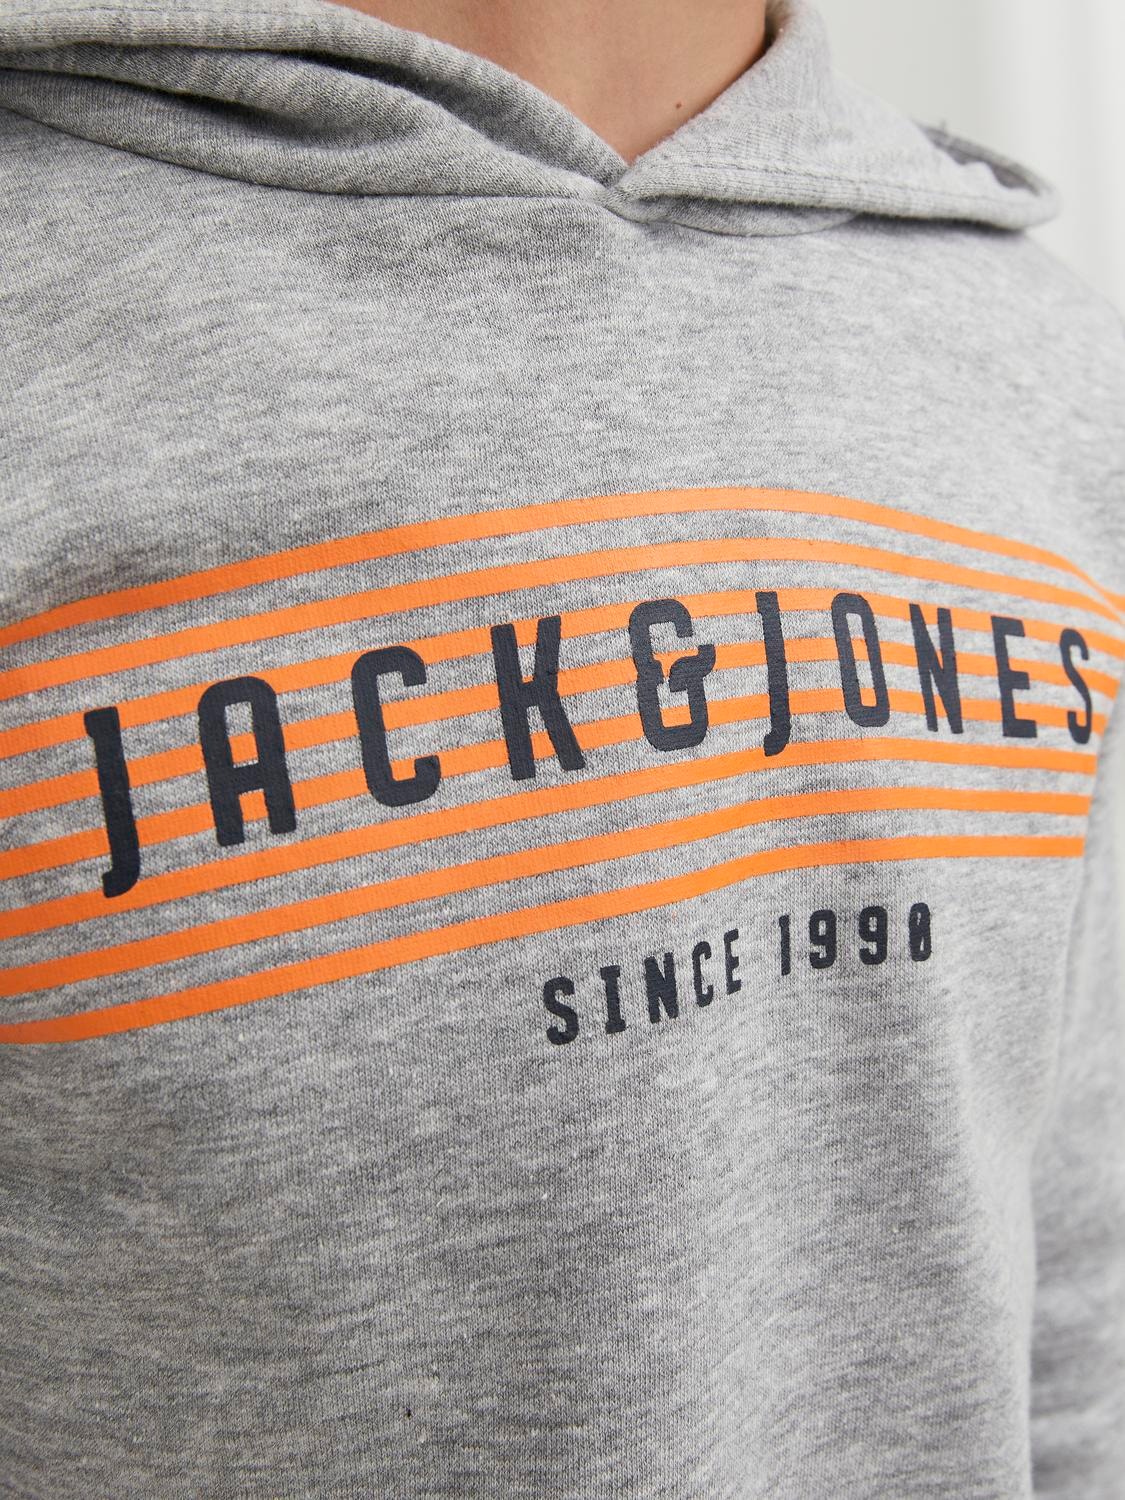 Jack & Jones Logo Hoodie For boys -Light Grey Melange - 12247861